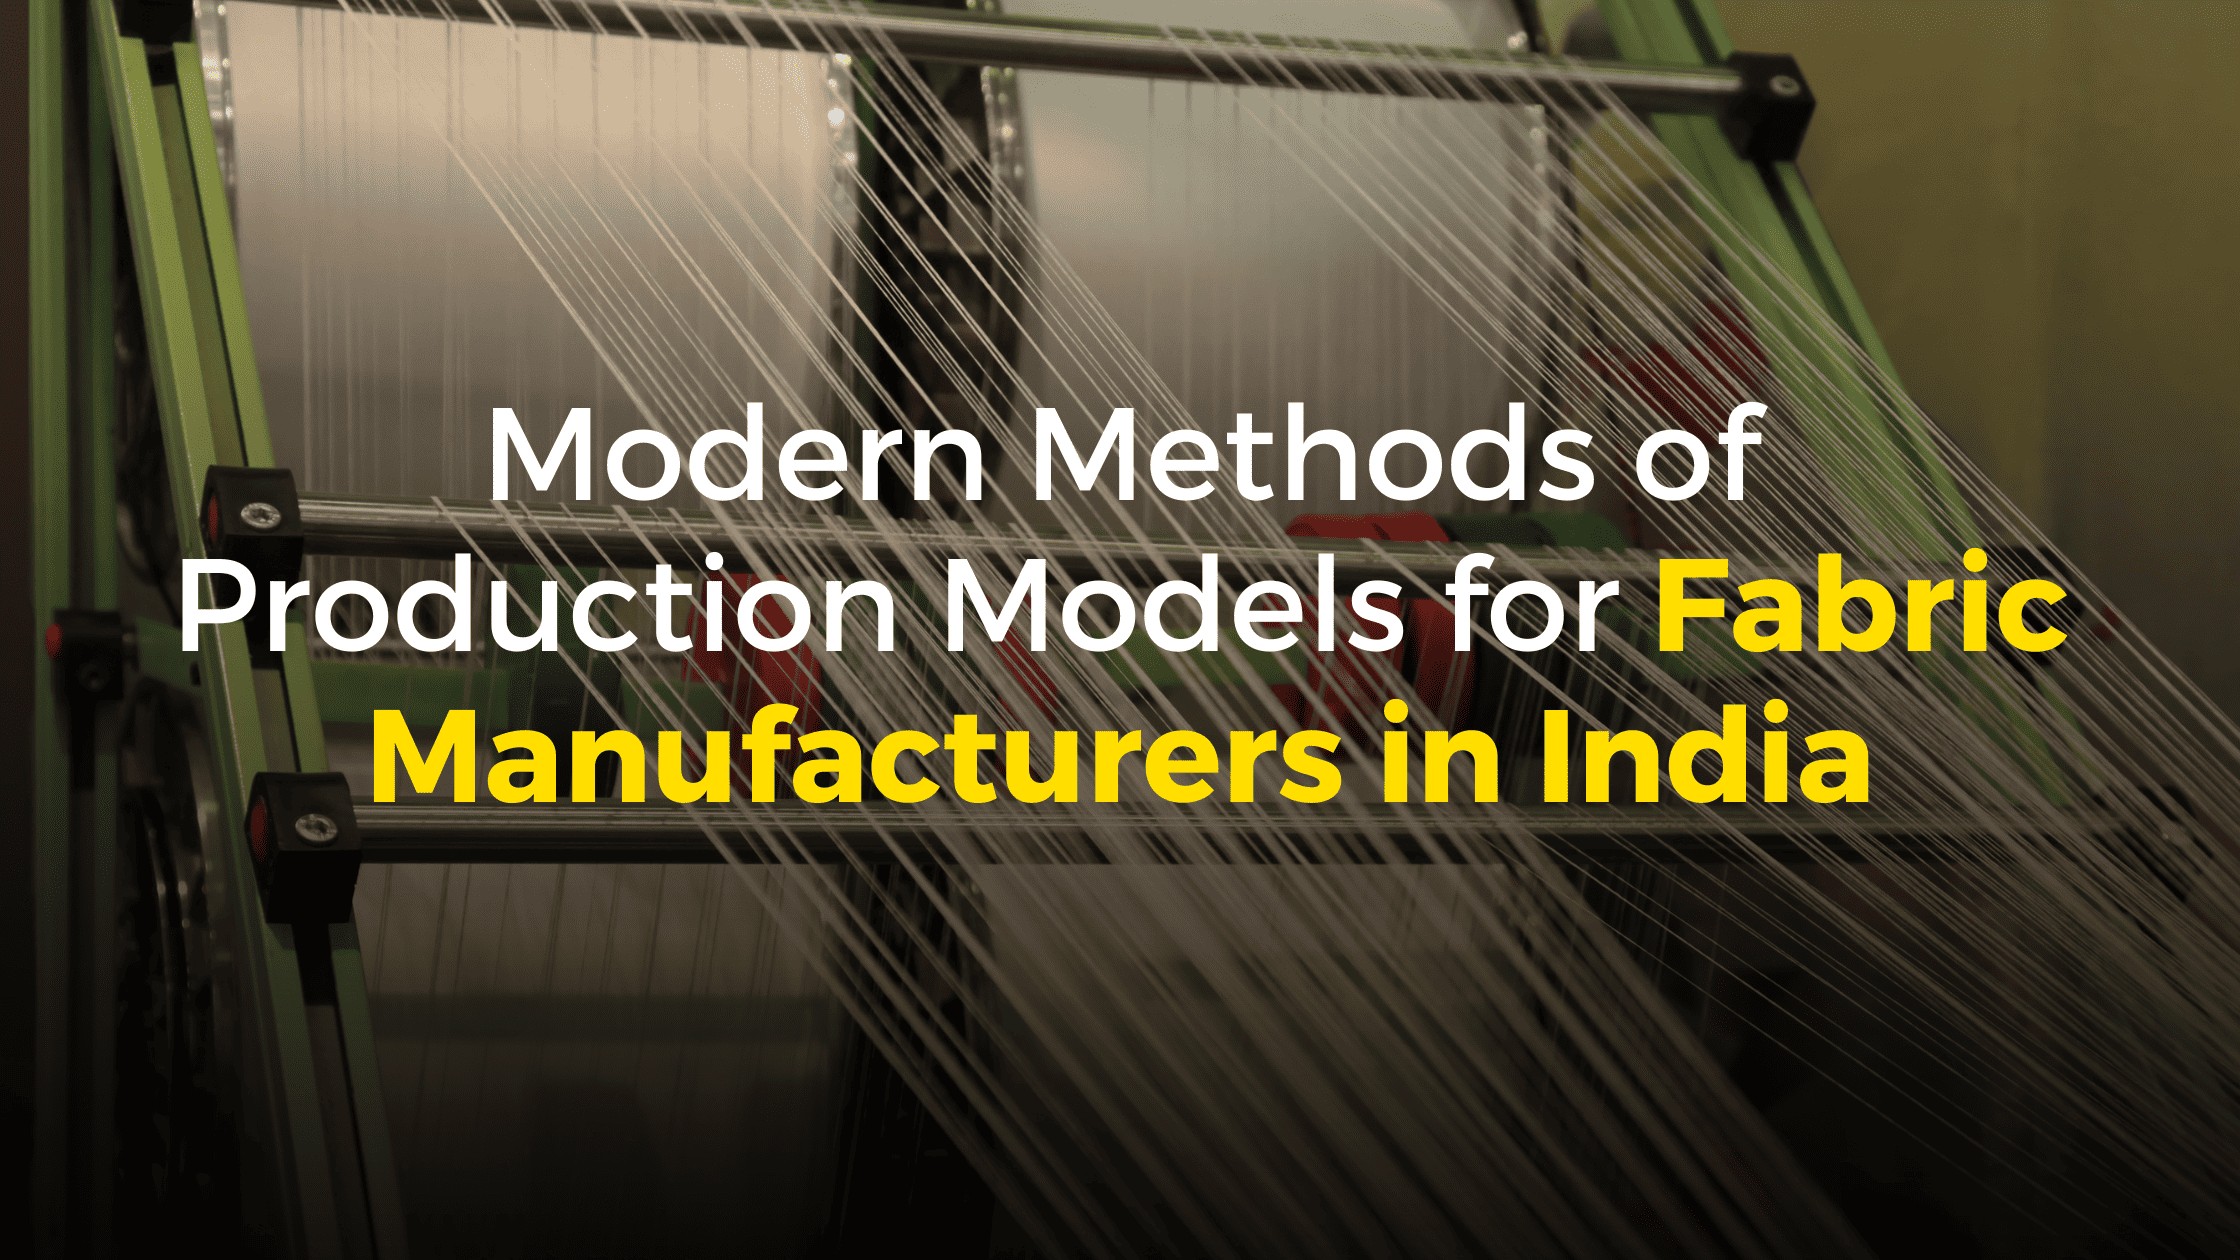 Fabric Manufacturers in India